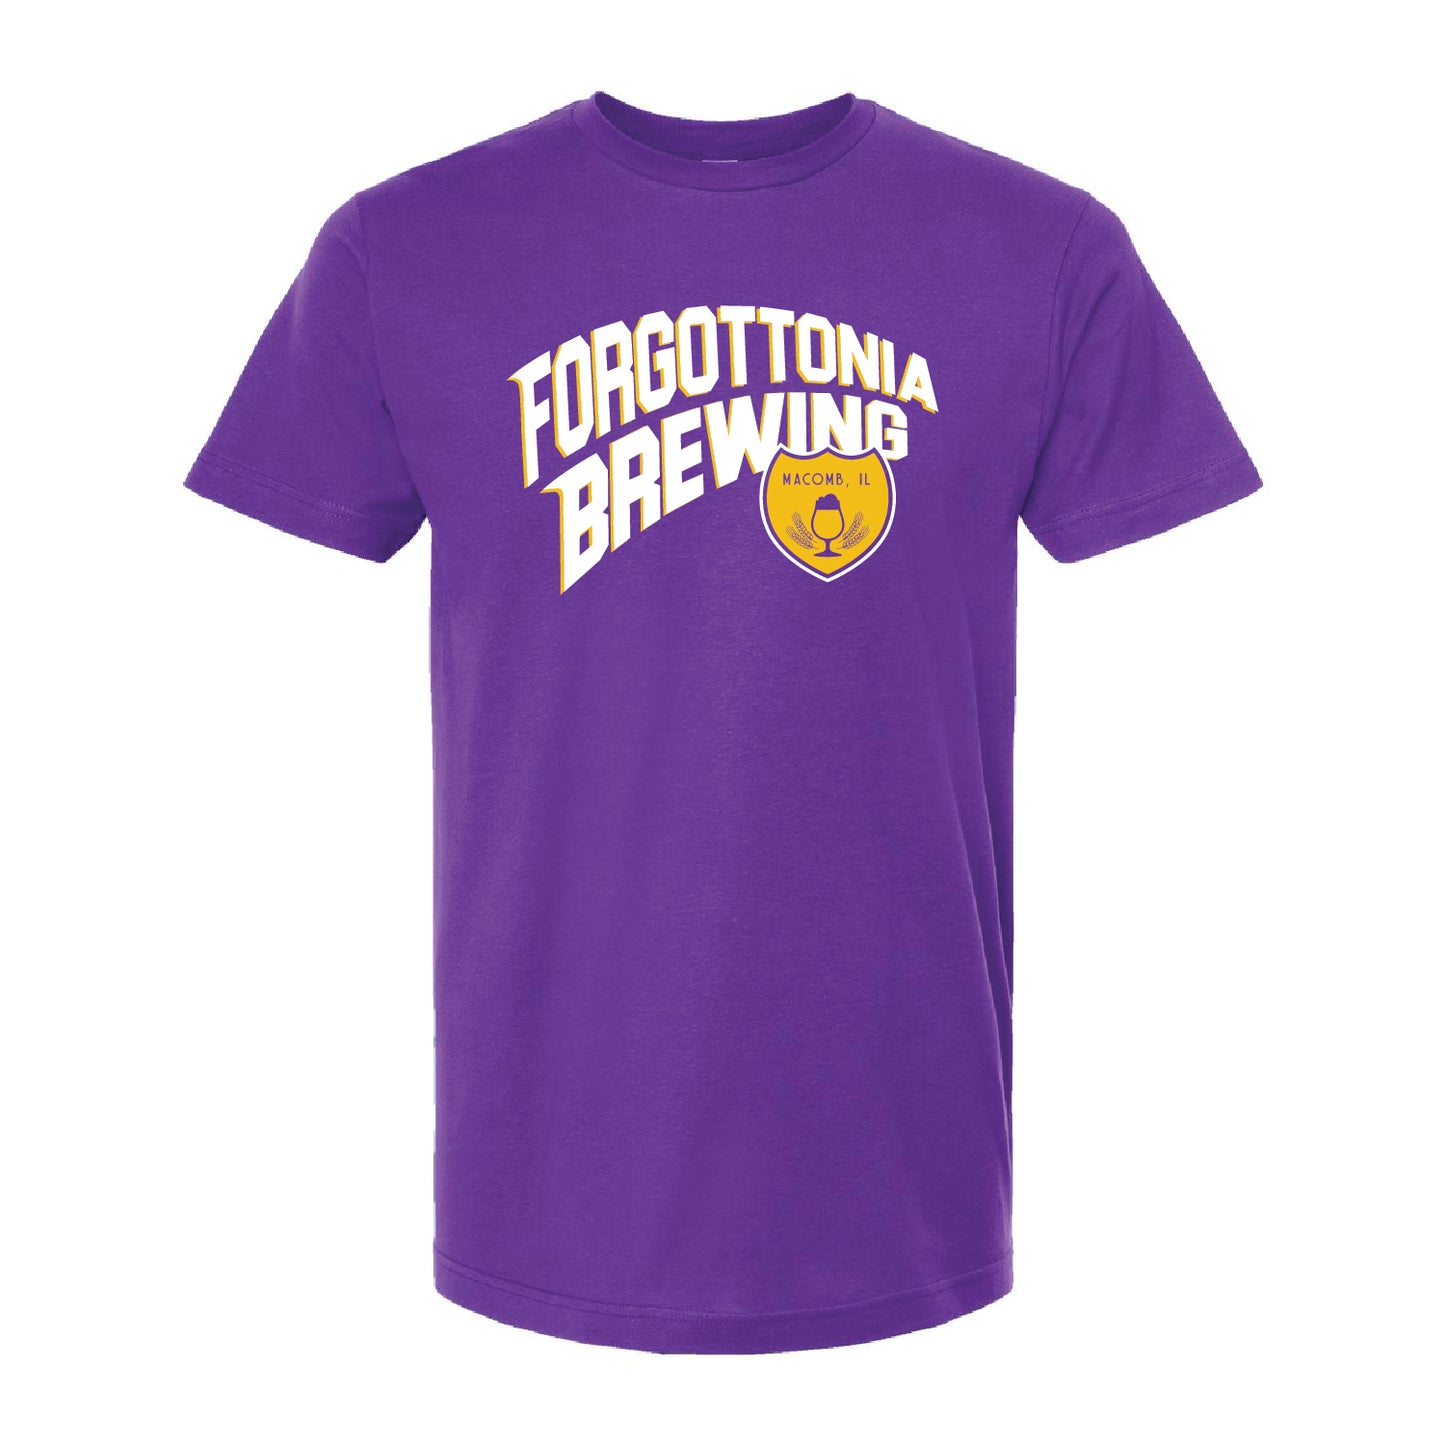 Forgottonia Brewing Unisex Fine Jersey T-Shirt